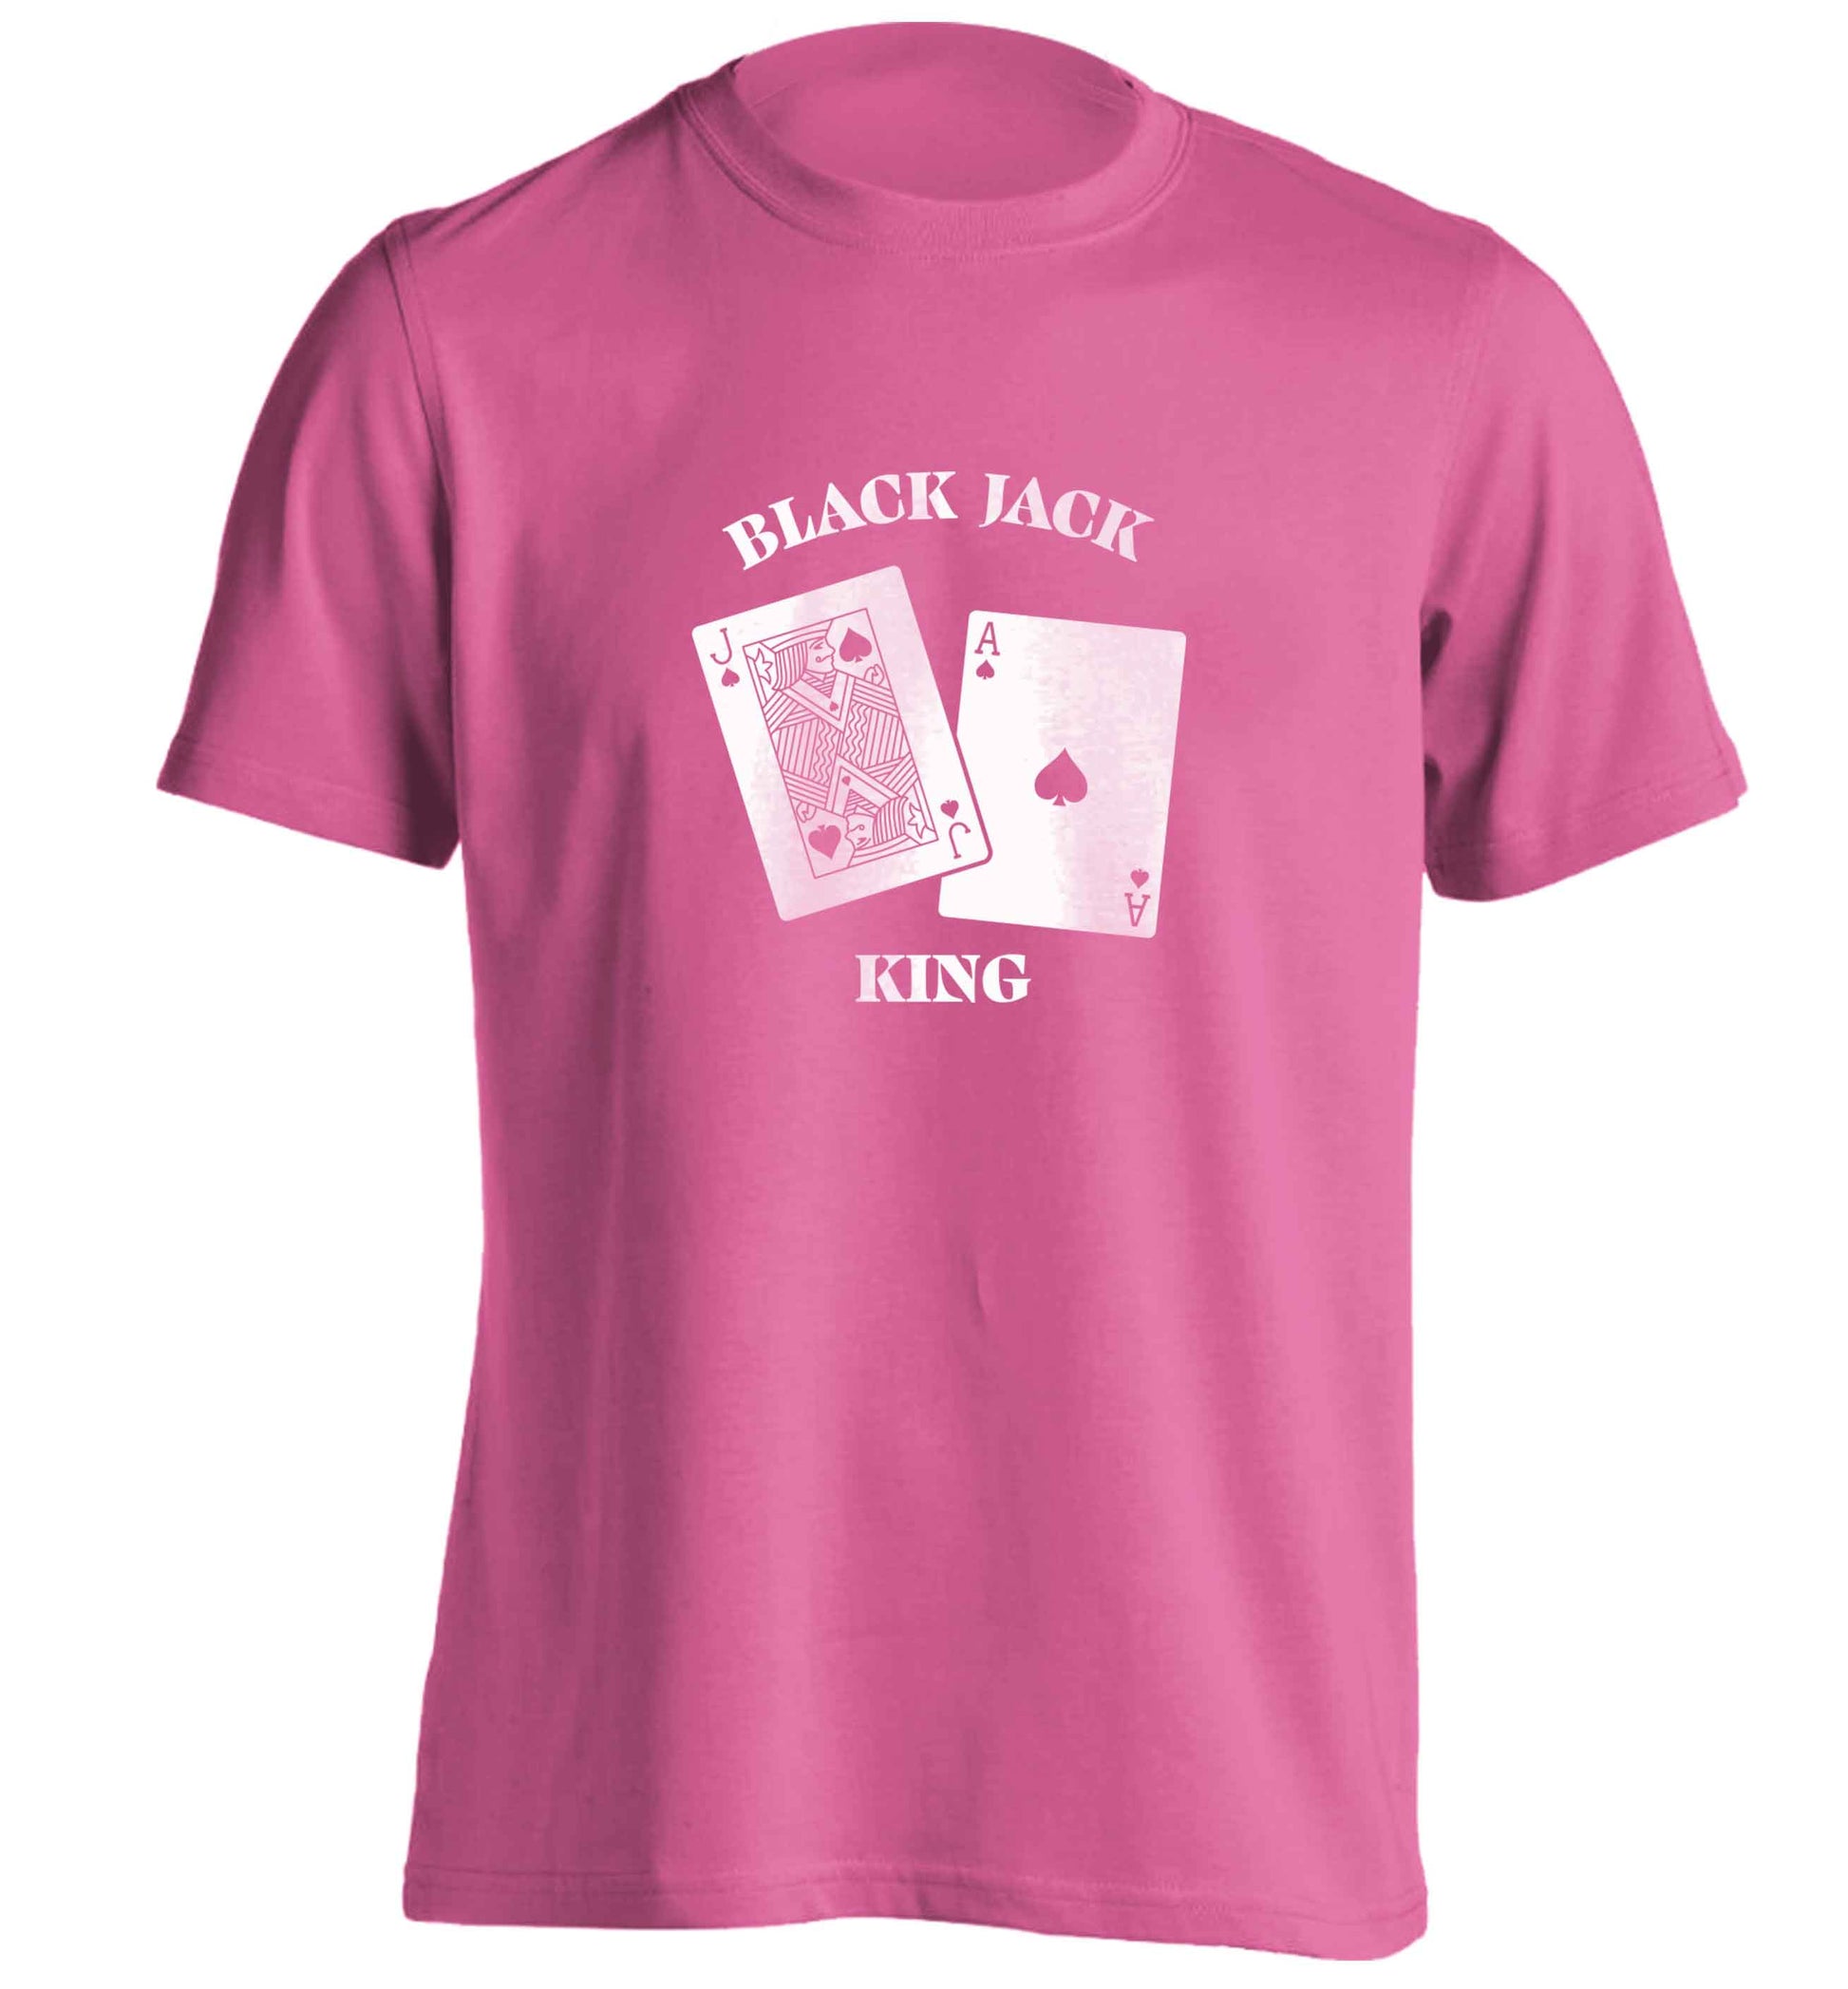 Blackjack king adults unisex pink Tshirt 2XL